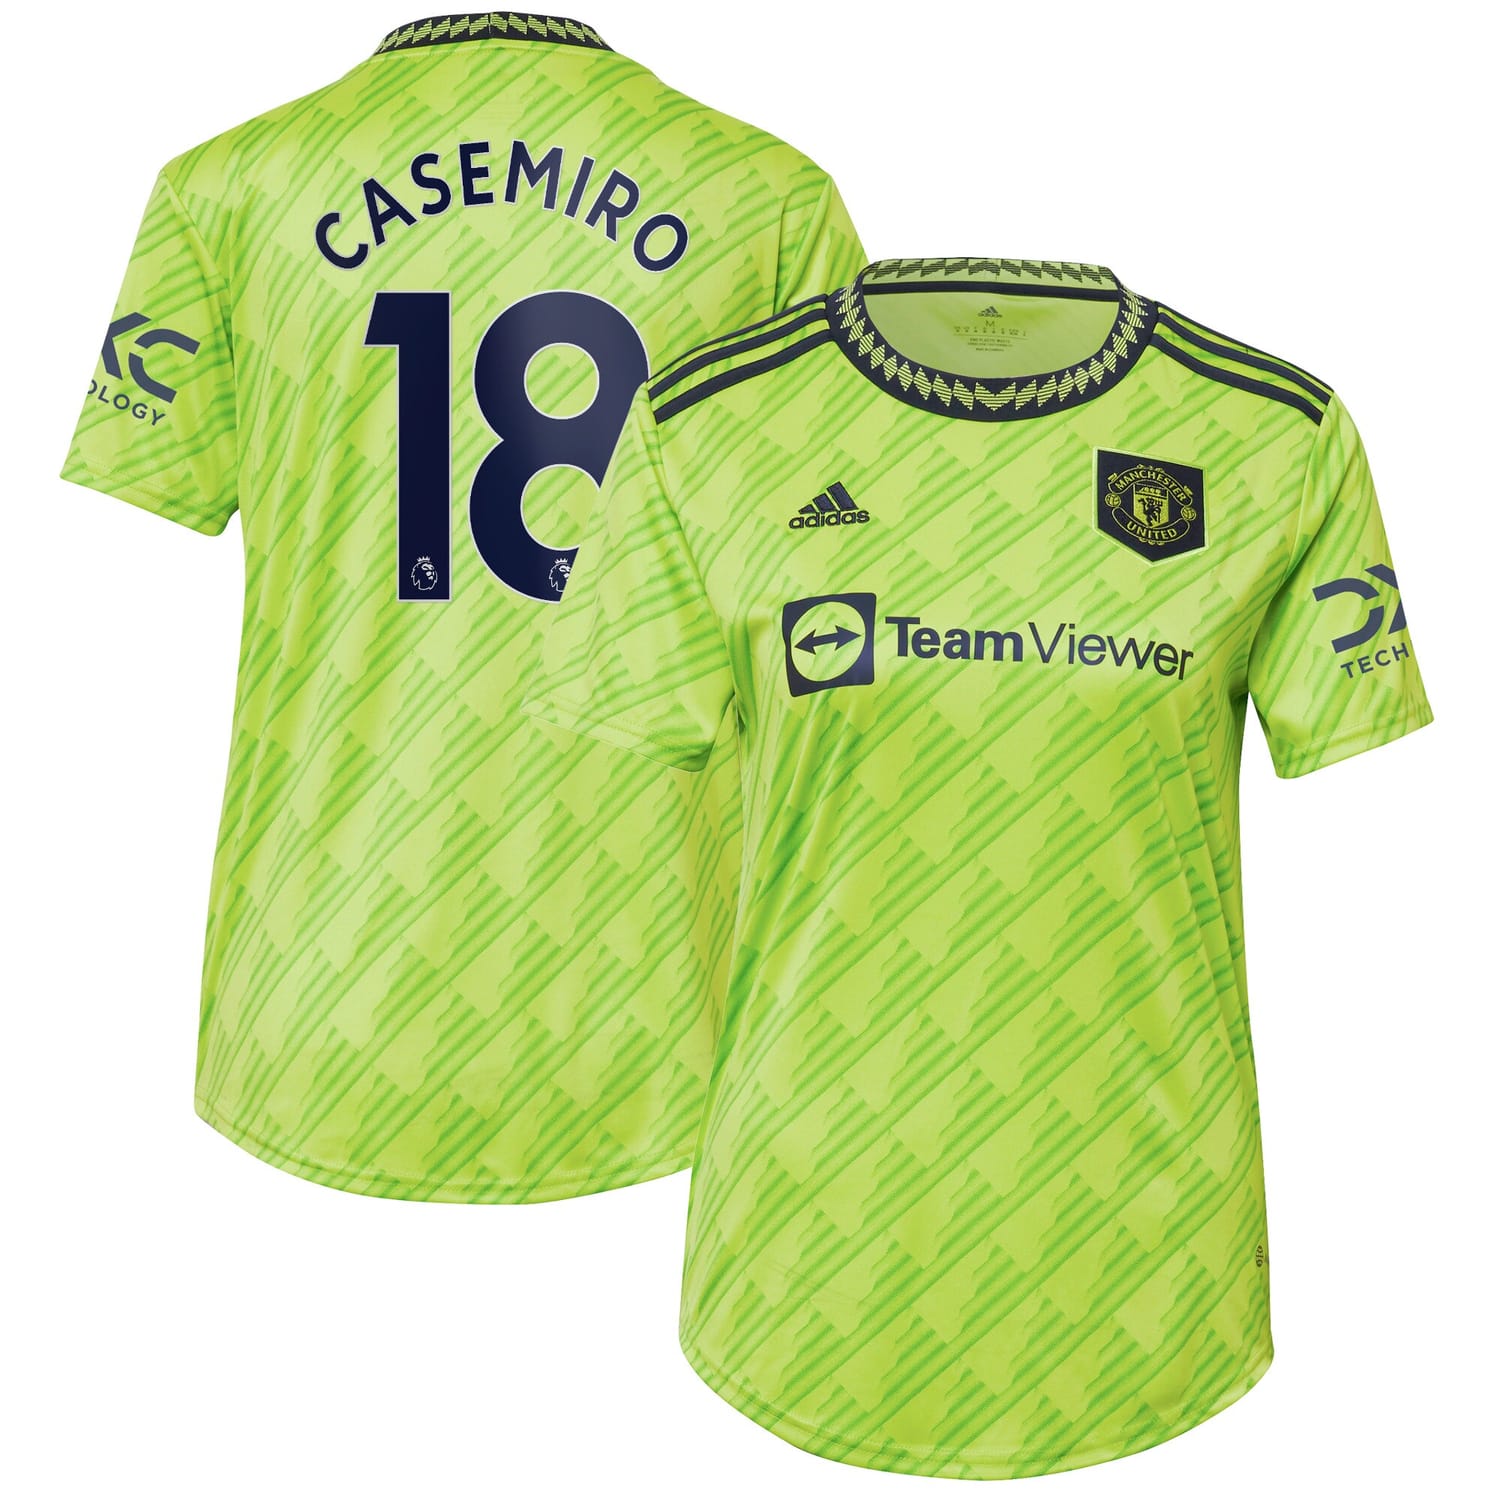 Premier League Manchester United Third Jersey Shirt 2022-23 player Casemiro 18 printing for Women